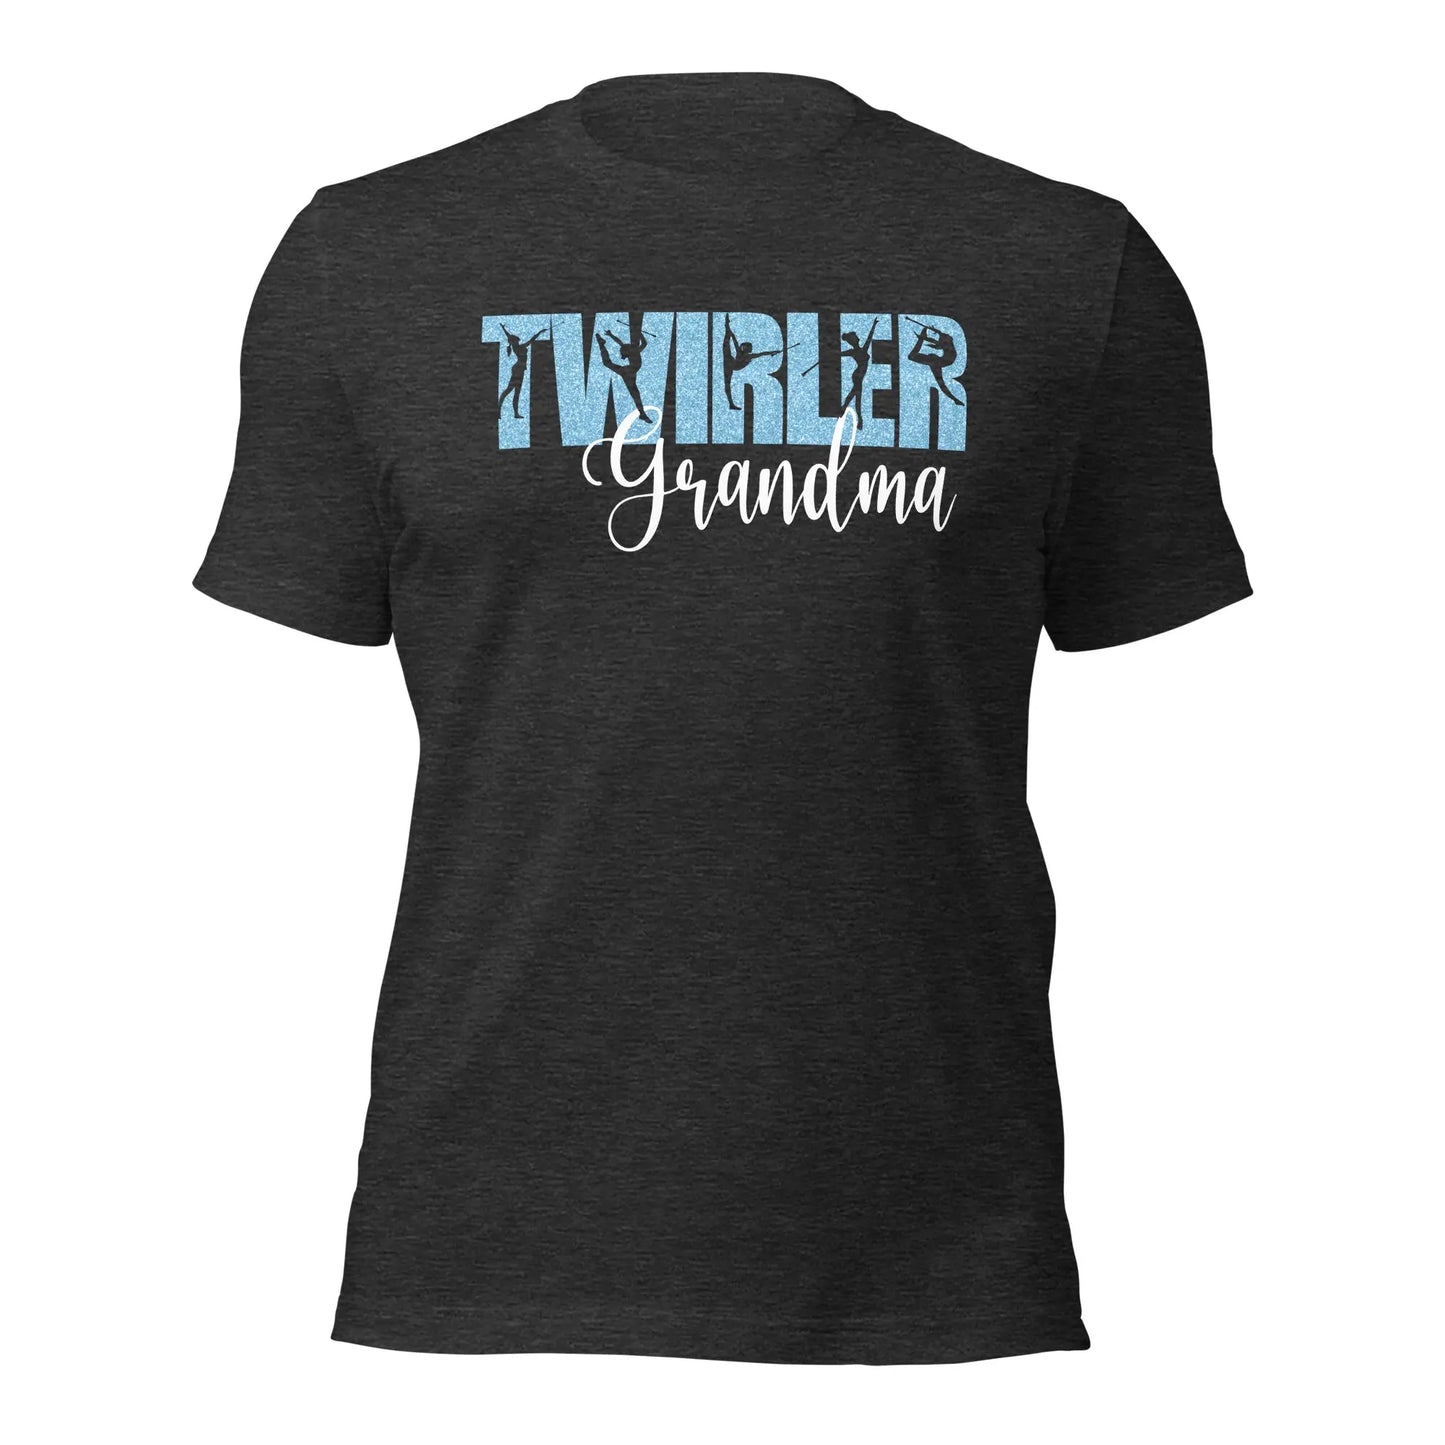 Twirler Grandma Unisex t-shirt - Front and Back Print Amazing Faith Designs